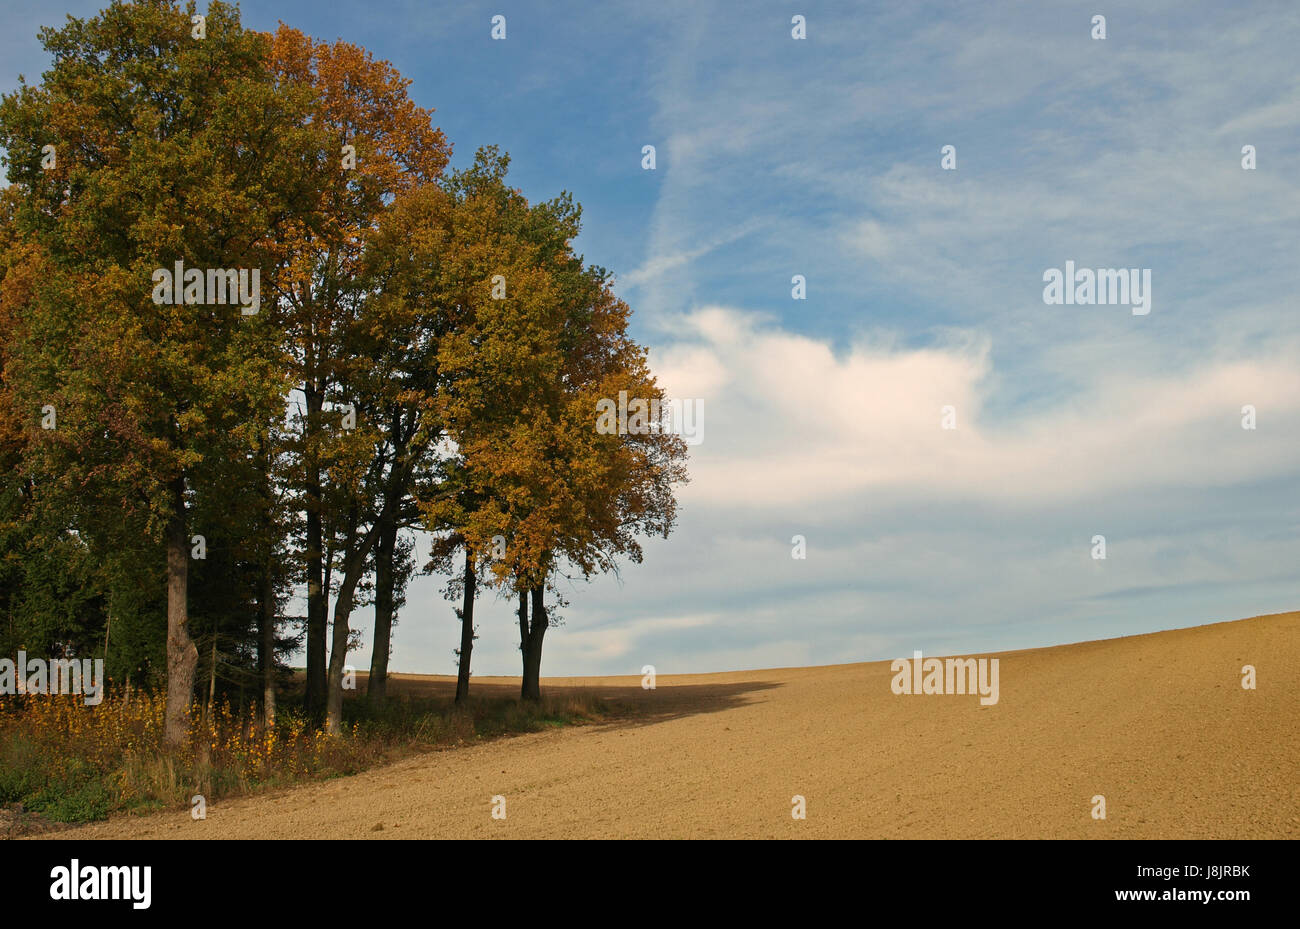 tree, cloud, field, clump of trees, autumn foliage, autumn colouring, Stock Photo